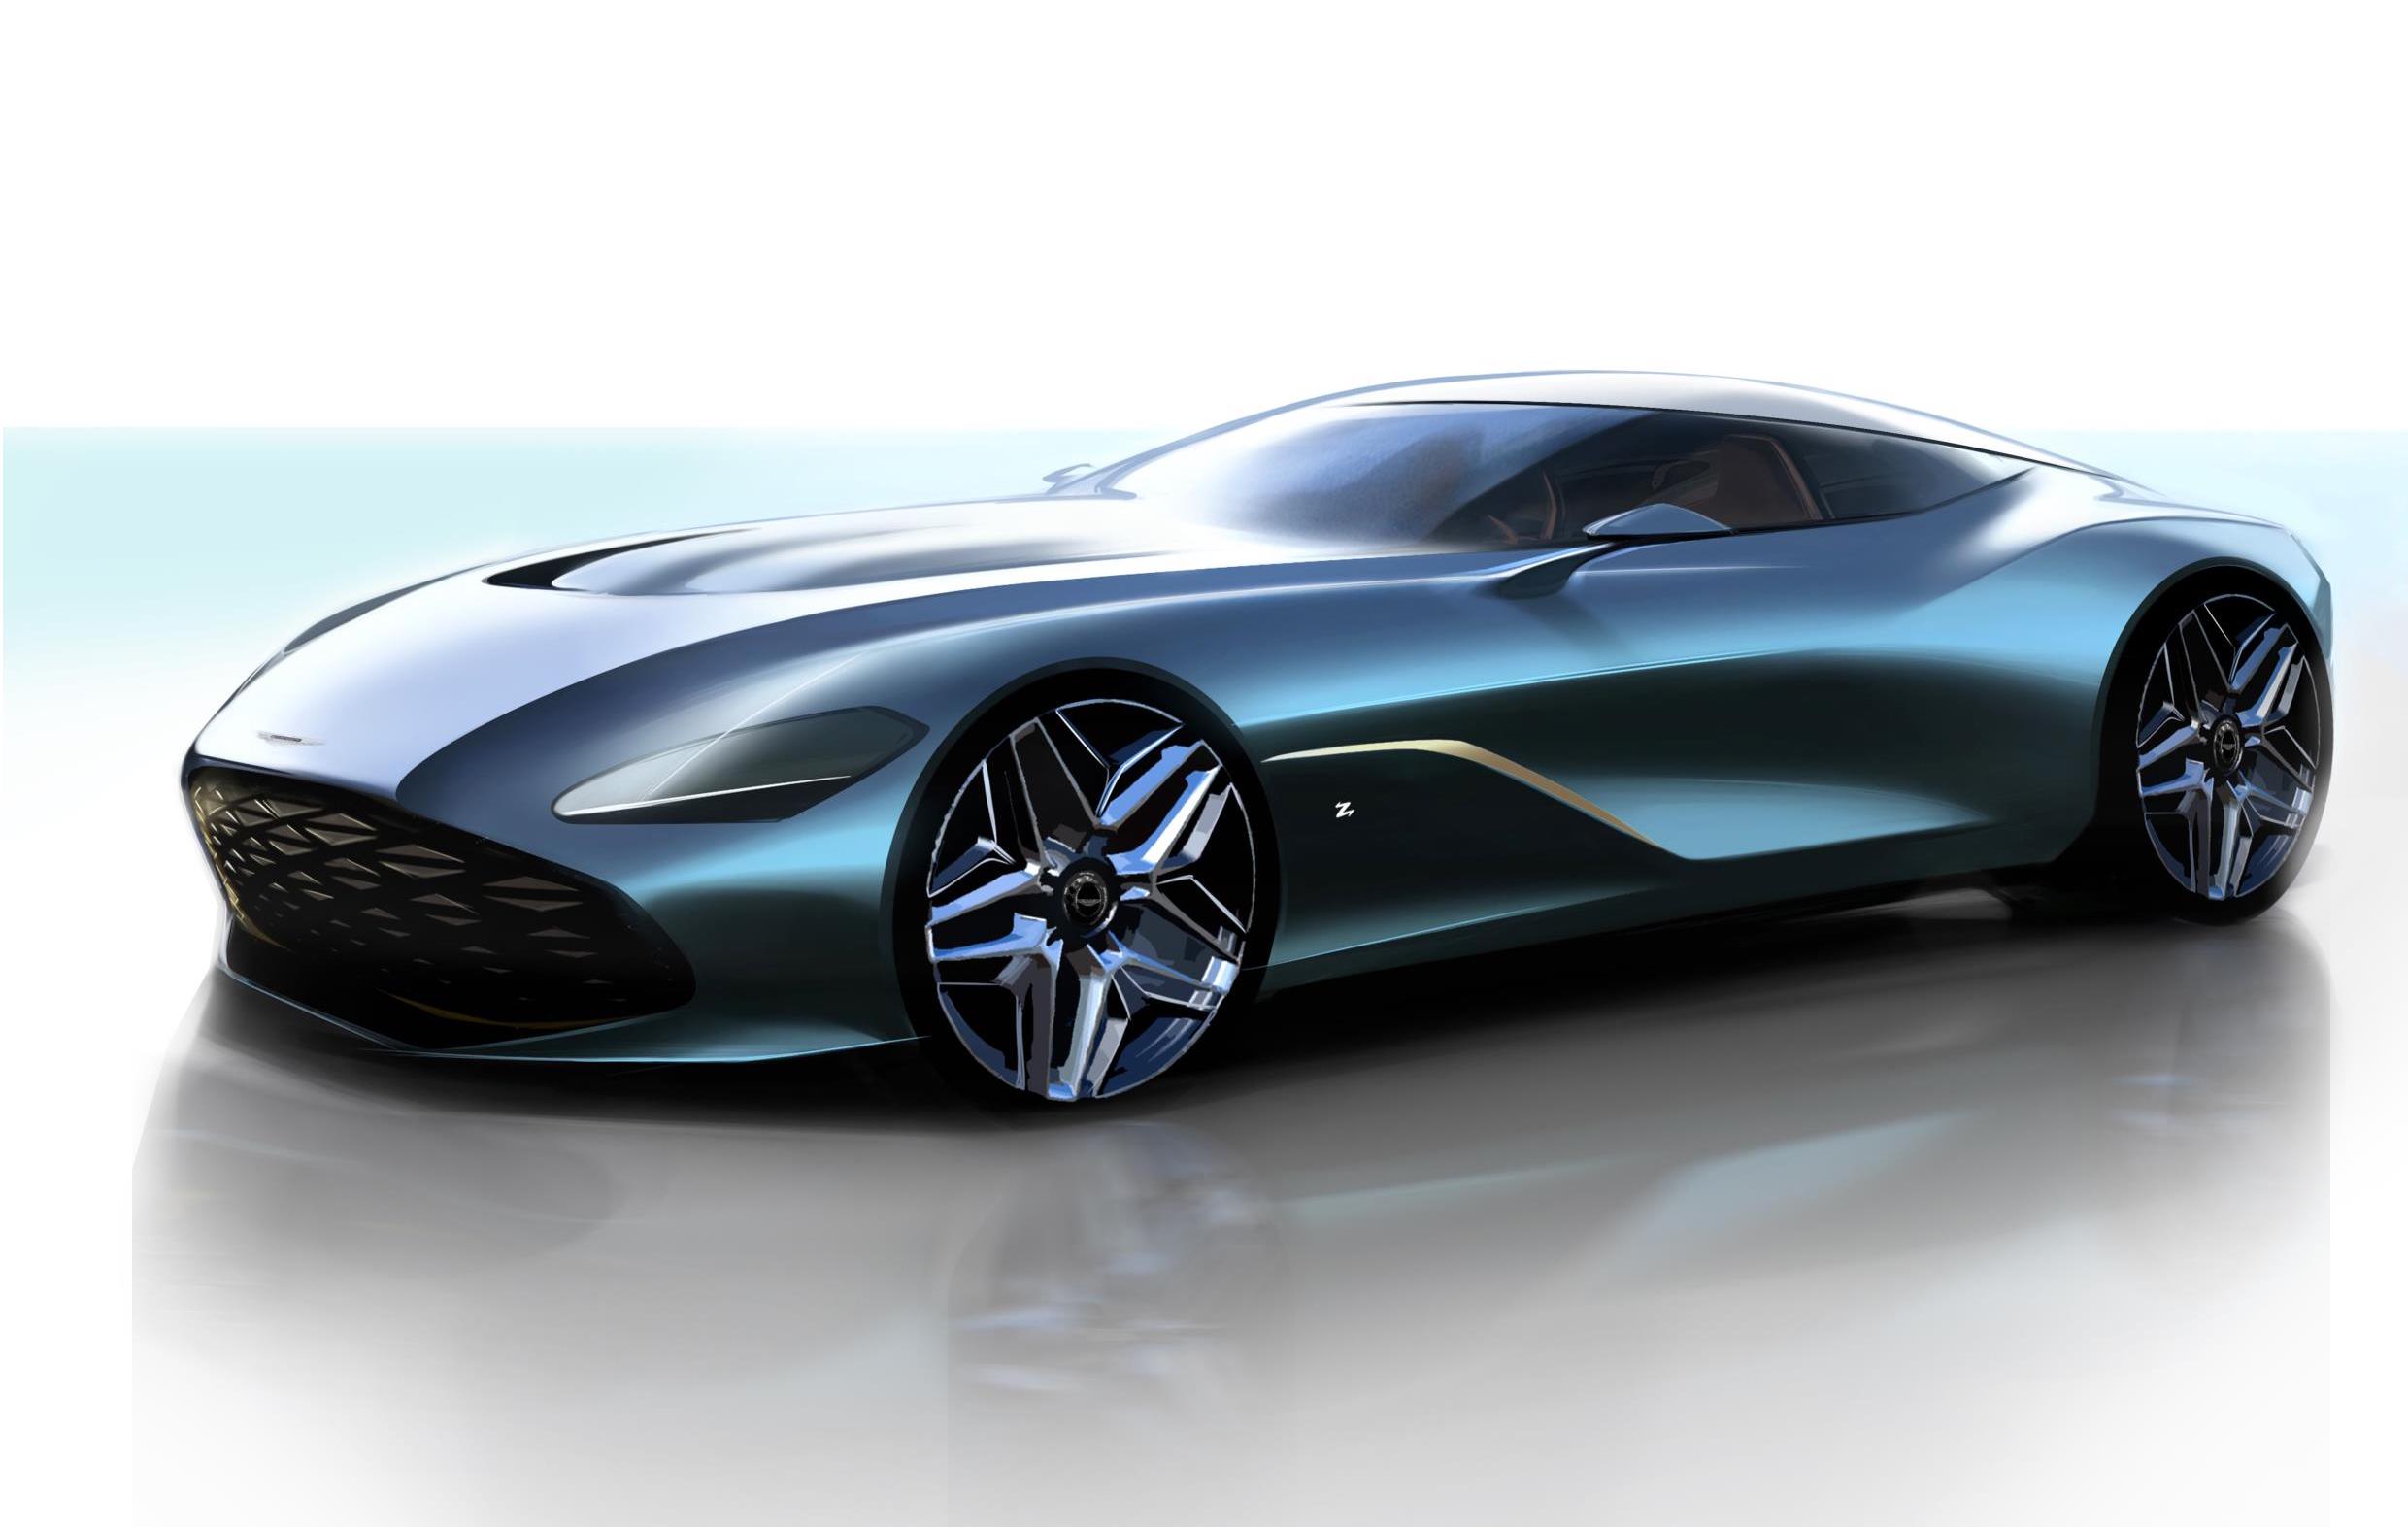 Aston Martin DBS GT Zagato special edition announced